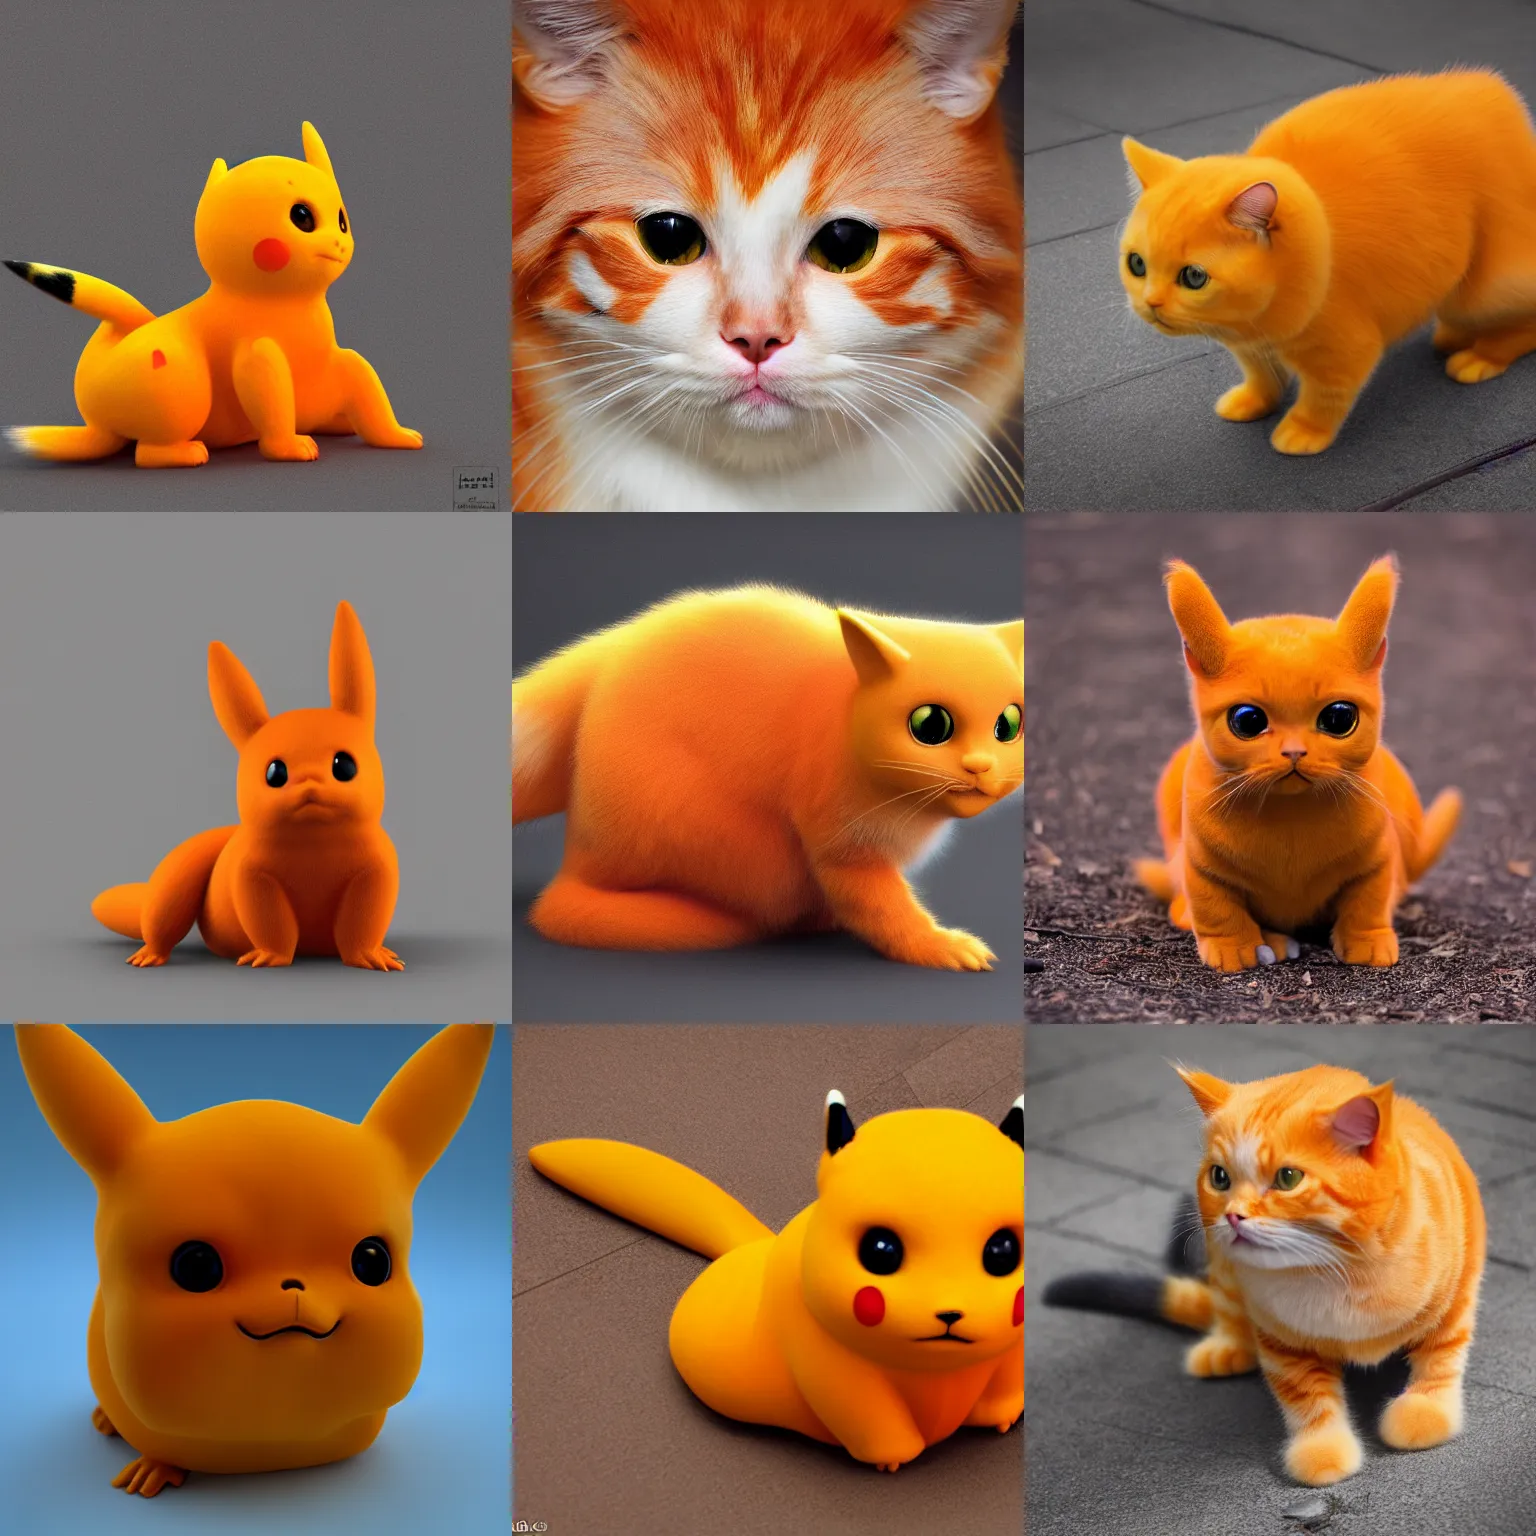 Prompt: kodachromatic photo of realistic orange pikachu cat,8k